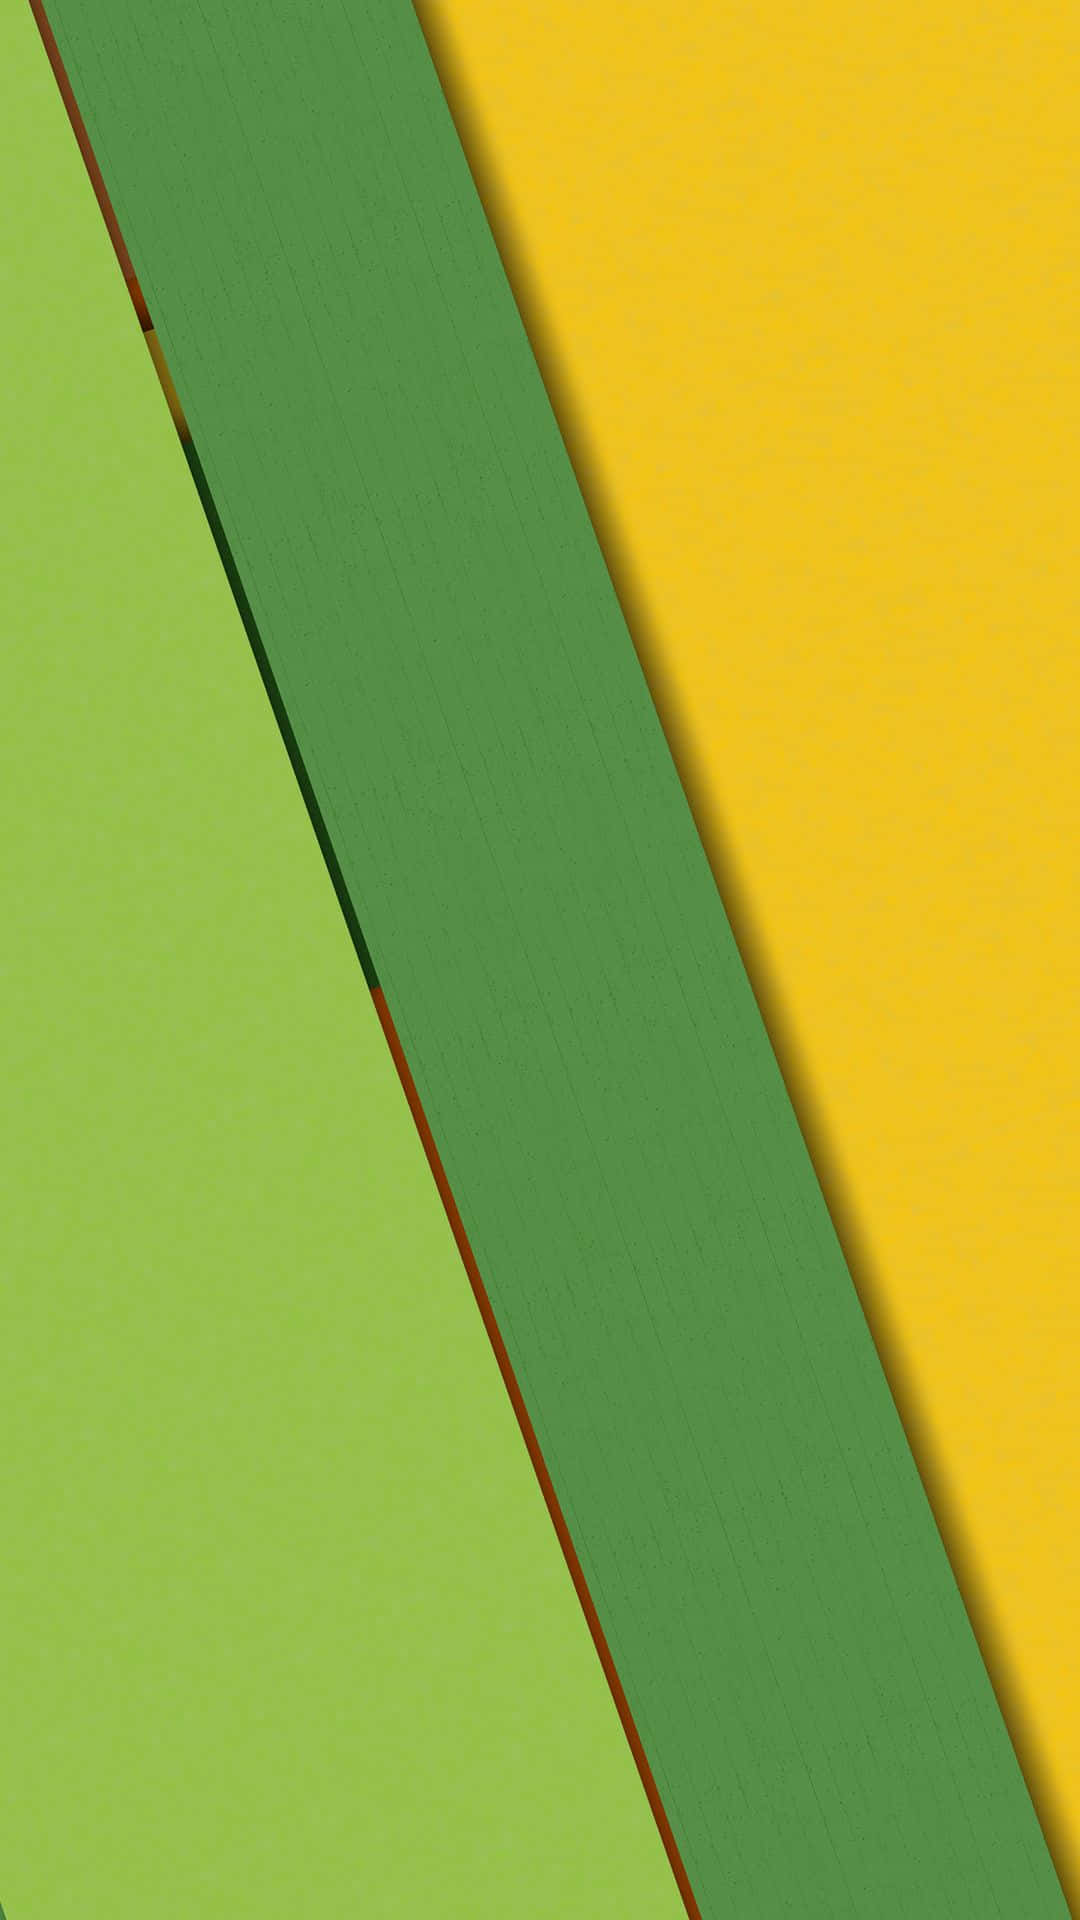 Amarilloy Verde Google Material Fondo de pantalla